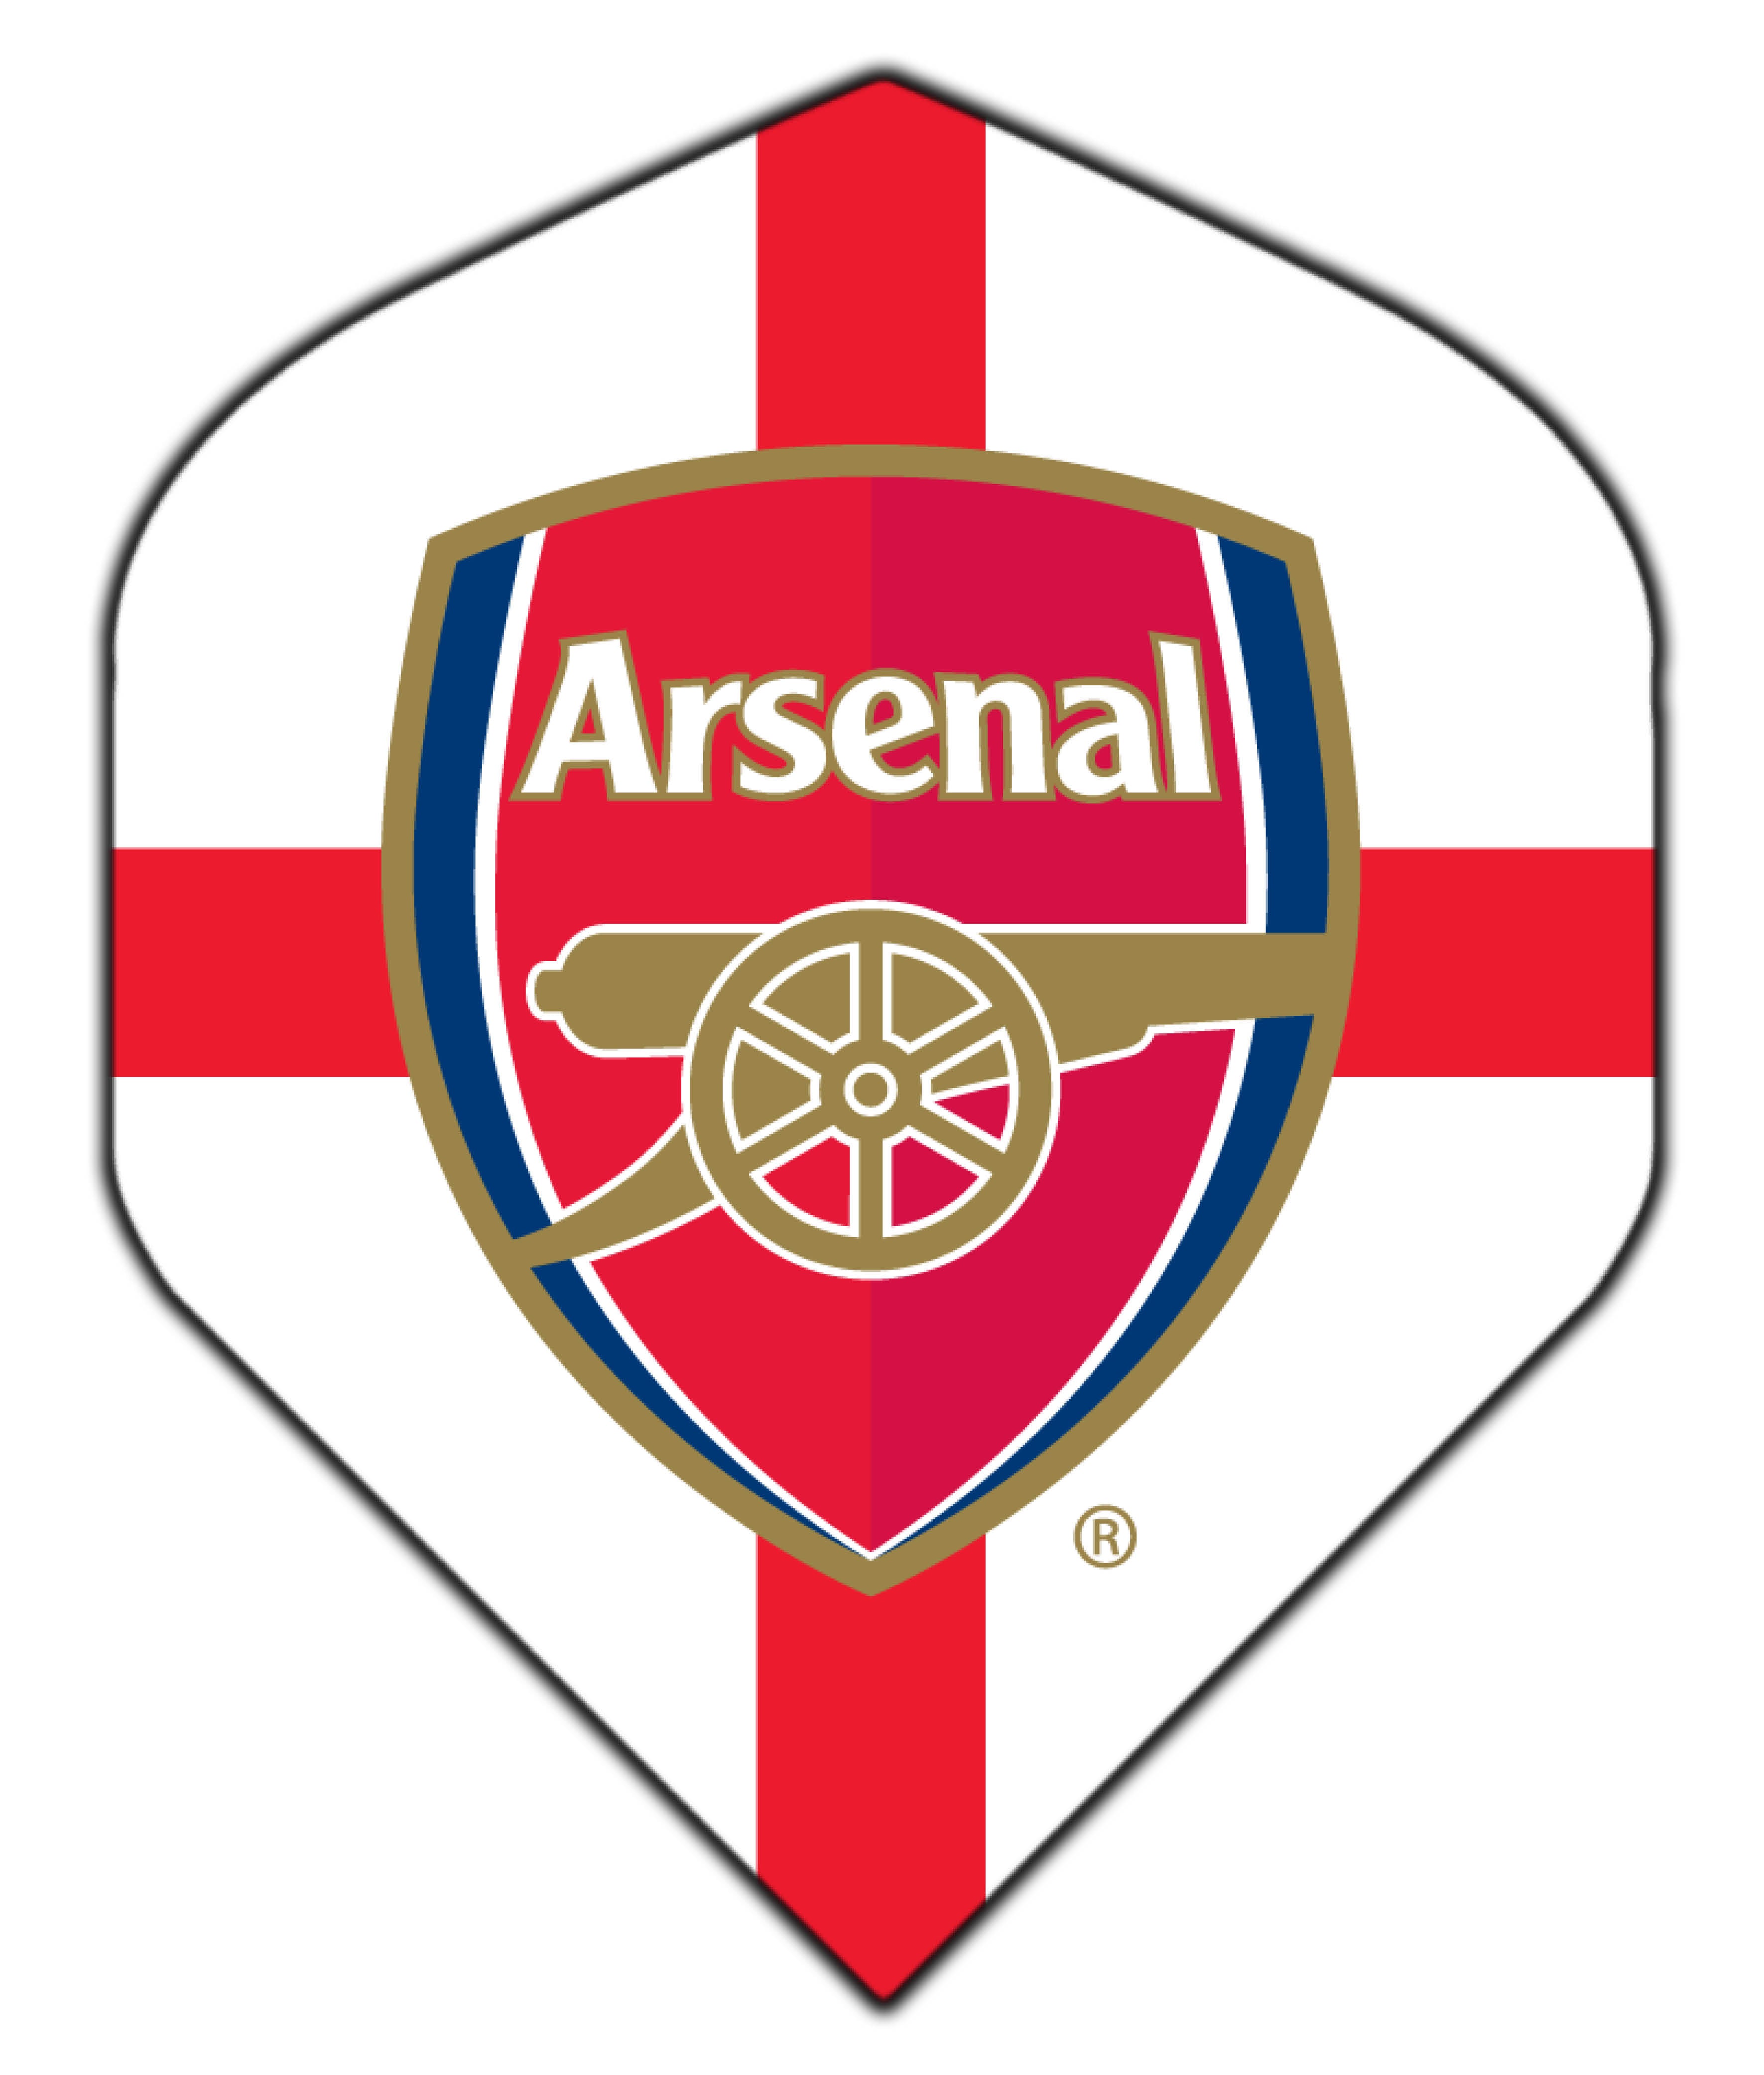 Special Edition Arsenal Football Club Standard